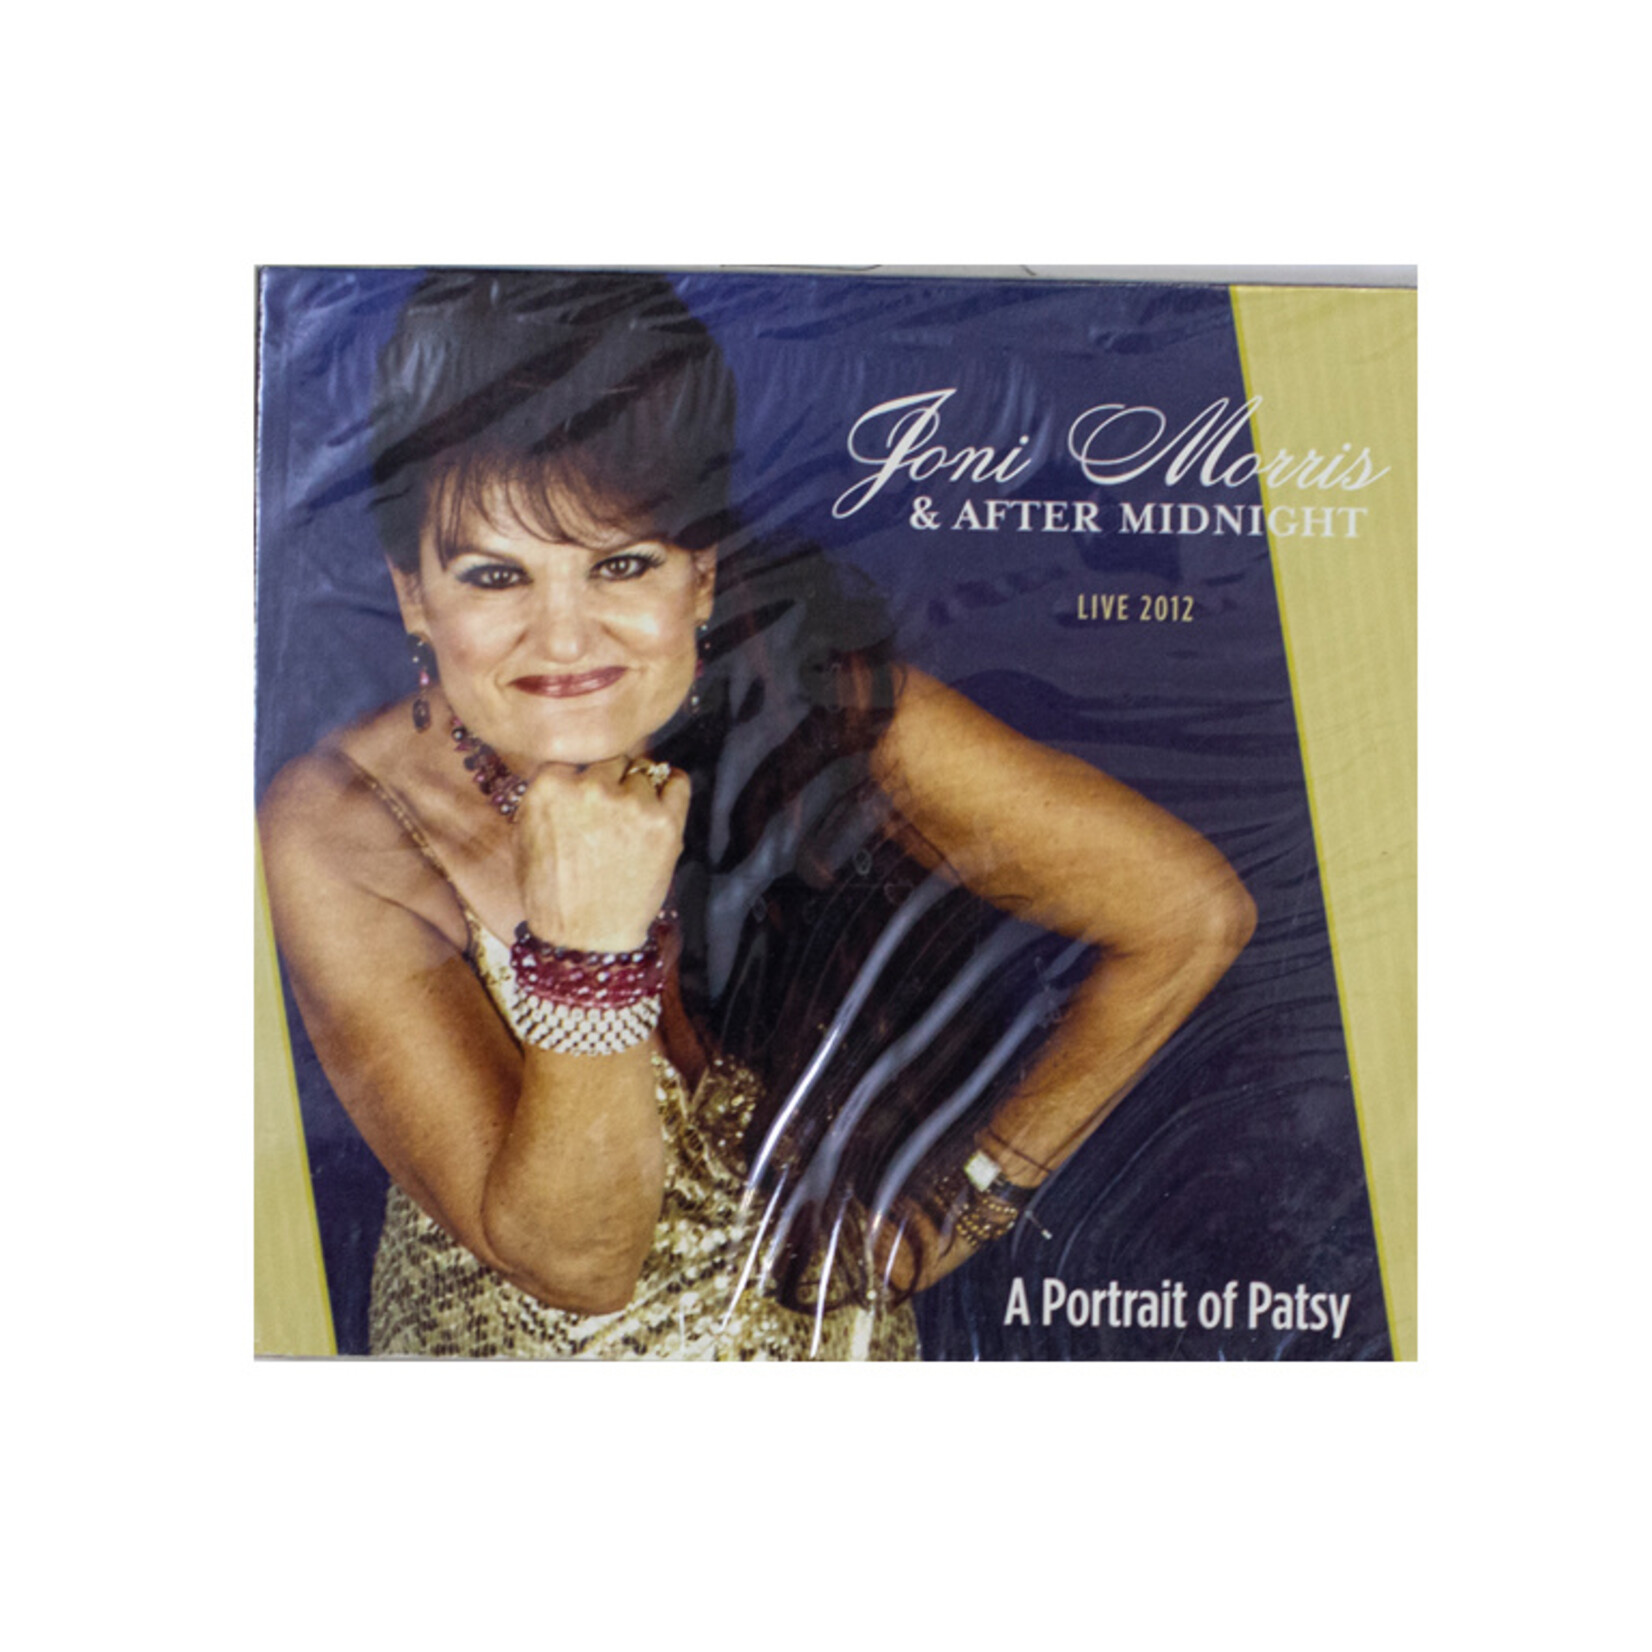 *JOM Joni Morris & After Midnight LIVE 2012 "A Portrait of Patsy" CD